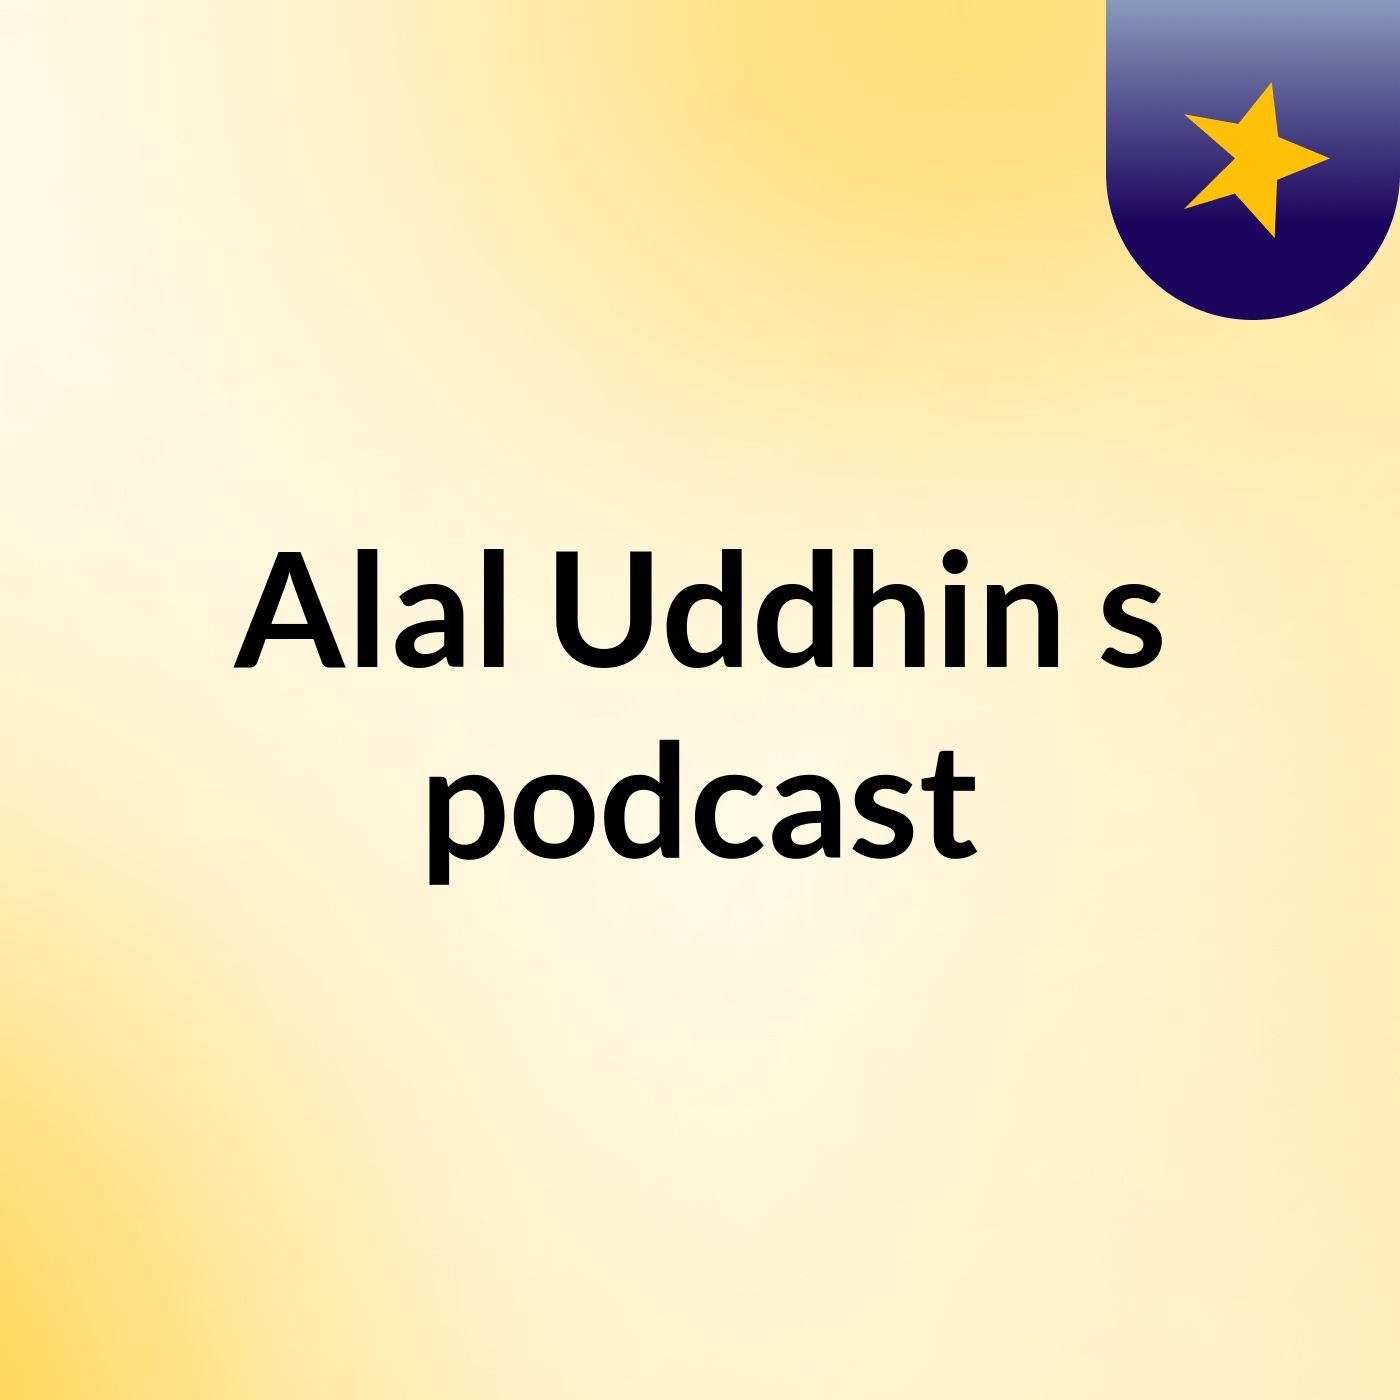 Episode 2 - Alal Uddhin's podcast